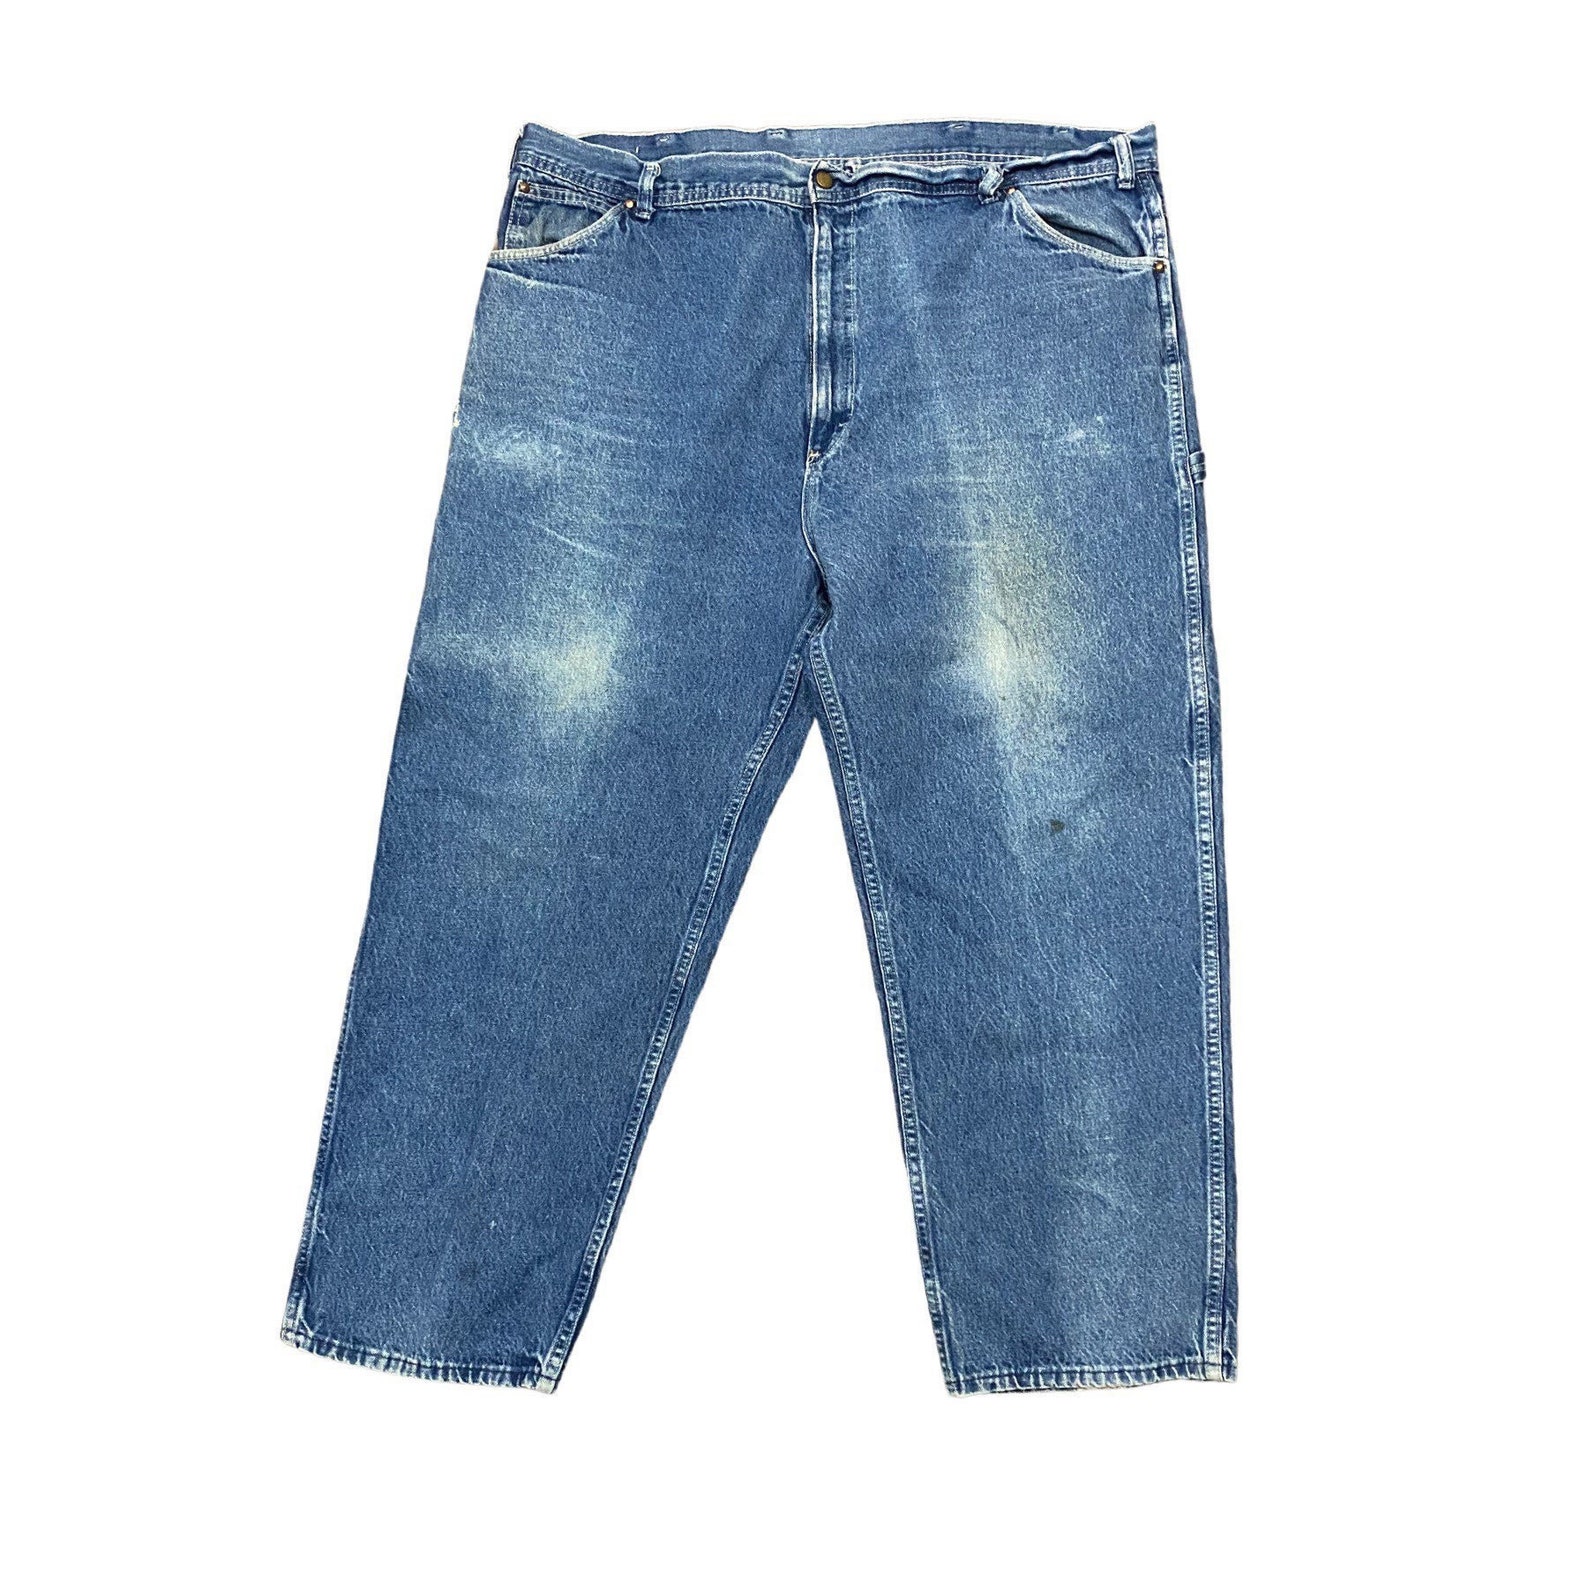 1960s Tuff Nut Denim Jeans / 60s Distressed Work Wear - Etsy